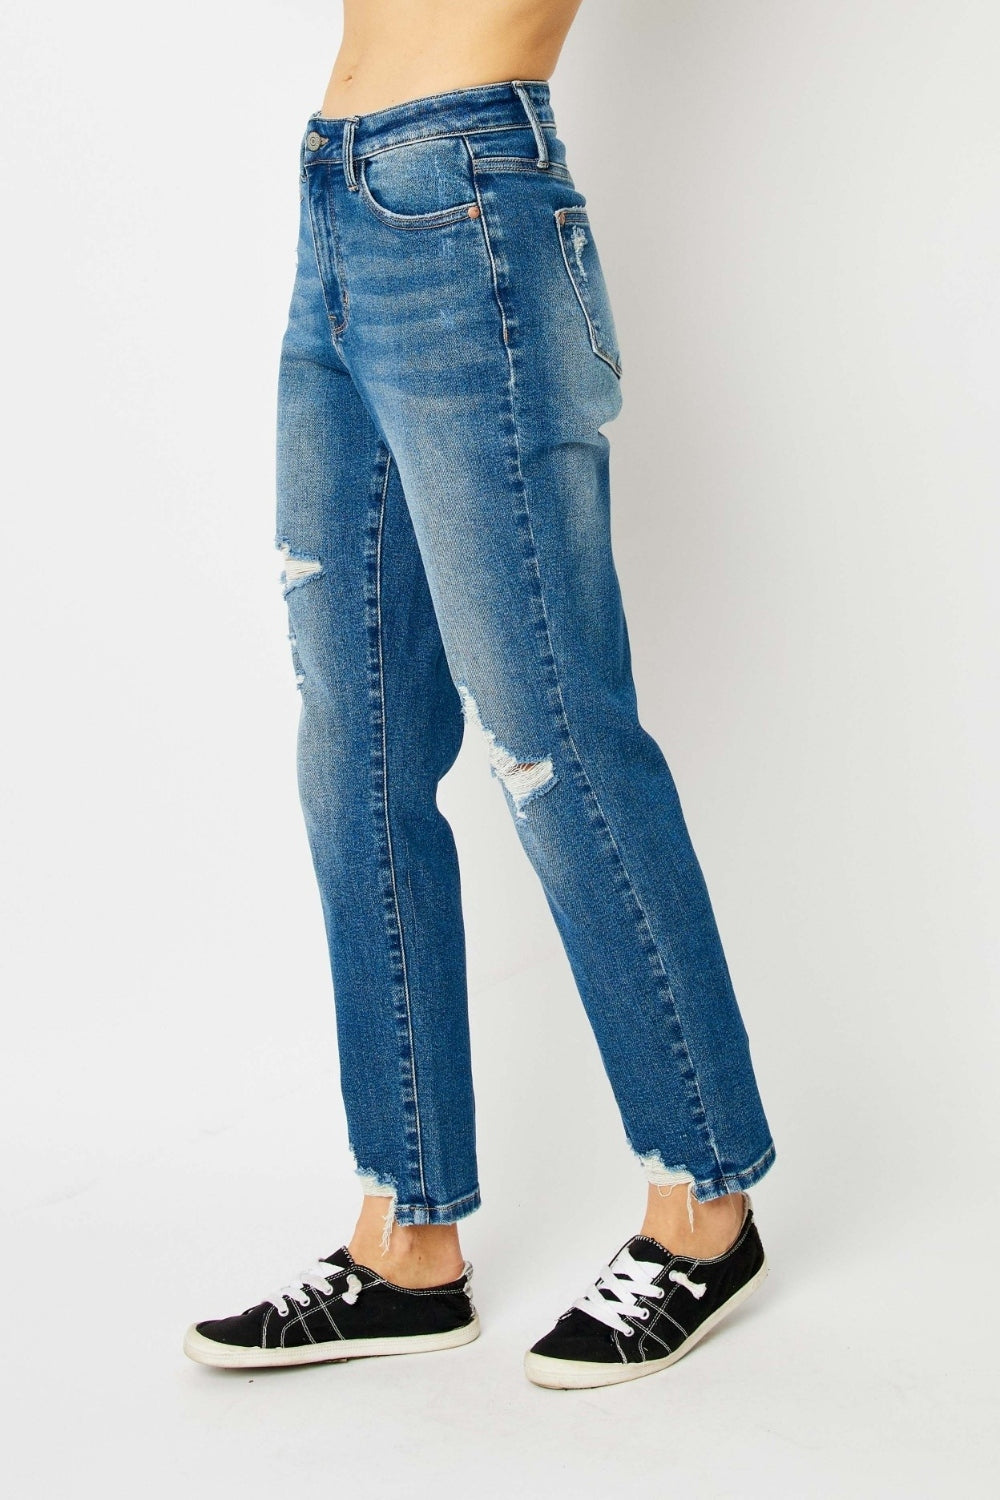 Judy Blue Full Size Distressed Slim Jeans - Scarlett's Riverside Boutique